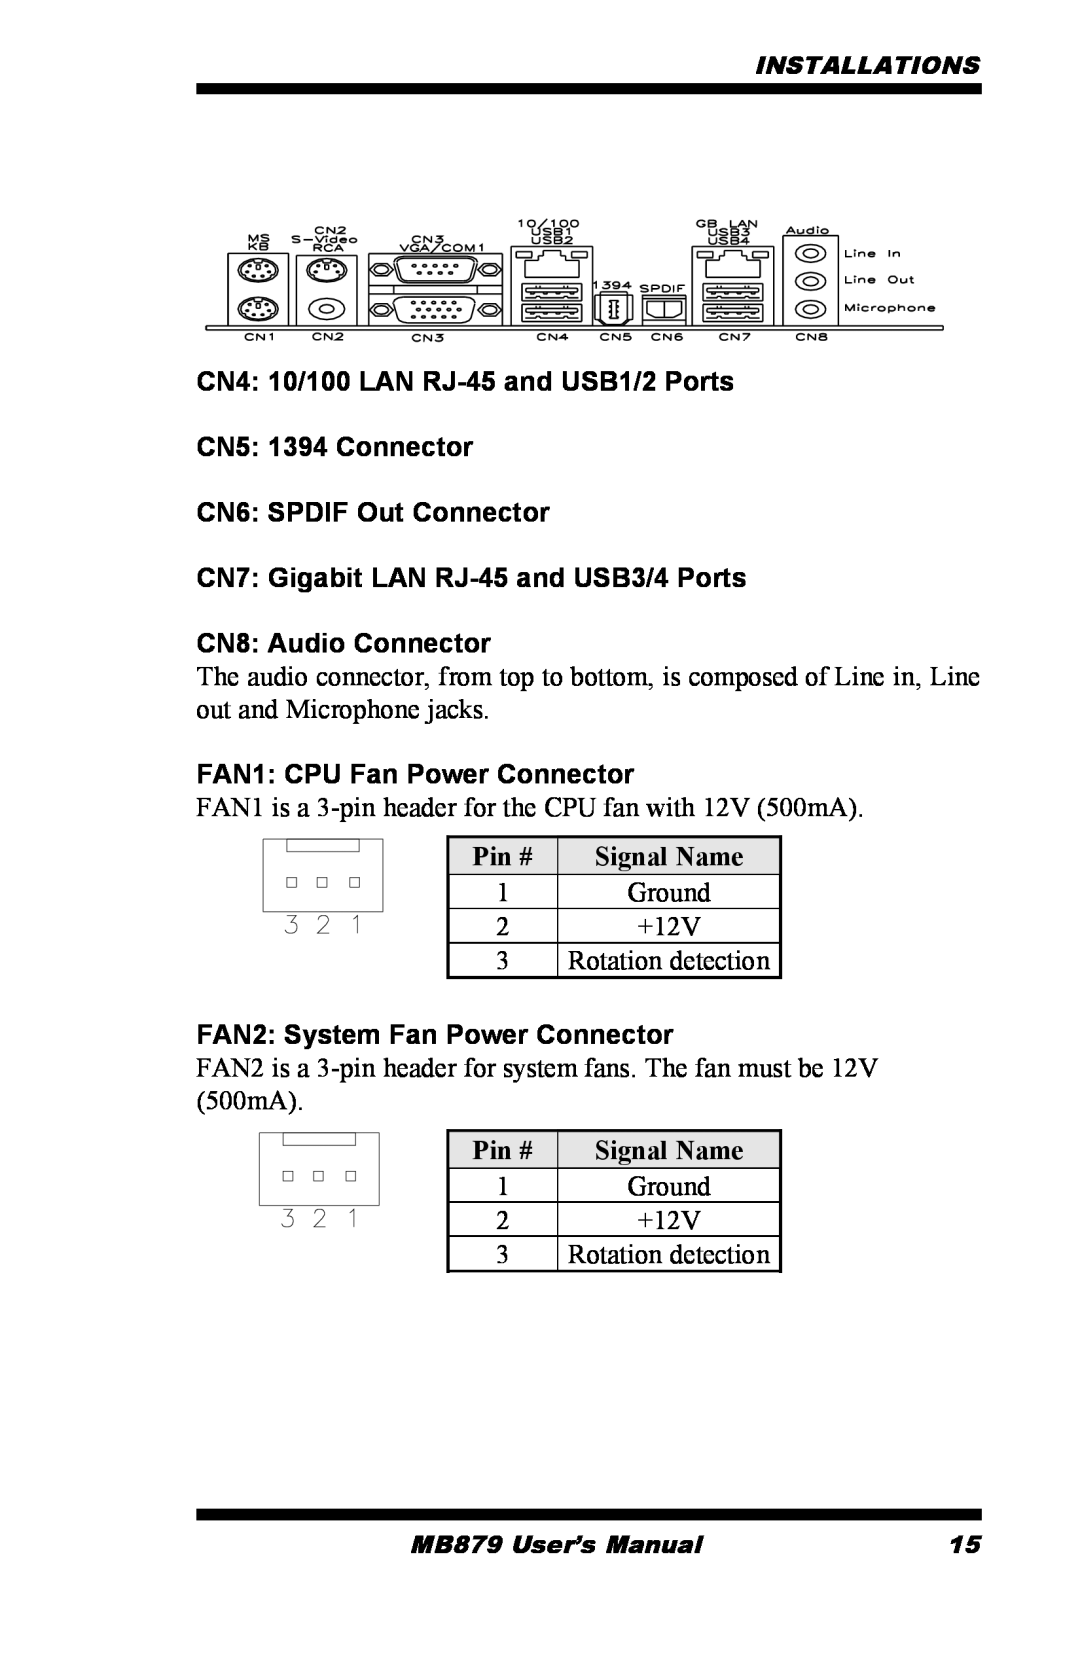 Intel MB879 CN4 10/100 LAN RJ-45 and USB1/2 Ports CN5 1394 Connector, CN8 Audio Connector, FAN1 CPU Fan Power Connector 